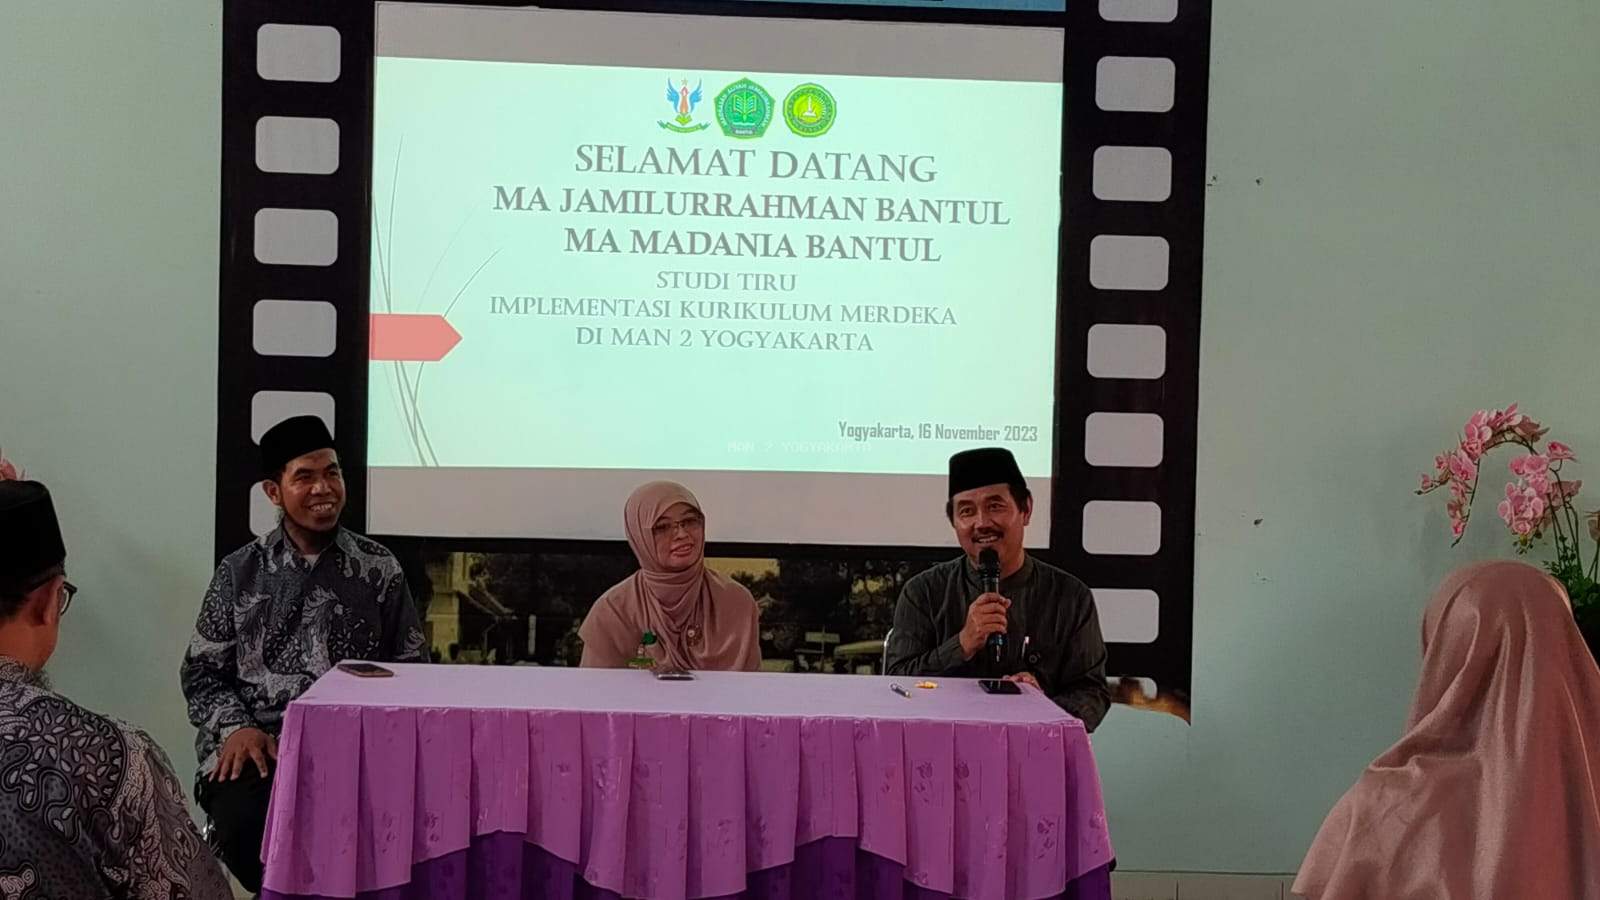 Kolaborasi Studi Tiru MA Madania dan MA Jamilurrahman Bantul Terkait IKM di MAN 2 Yogyakarta  